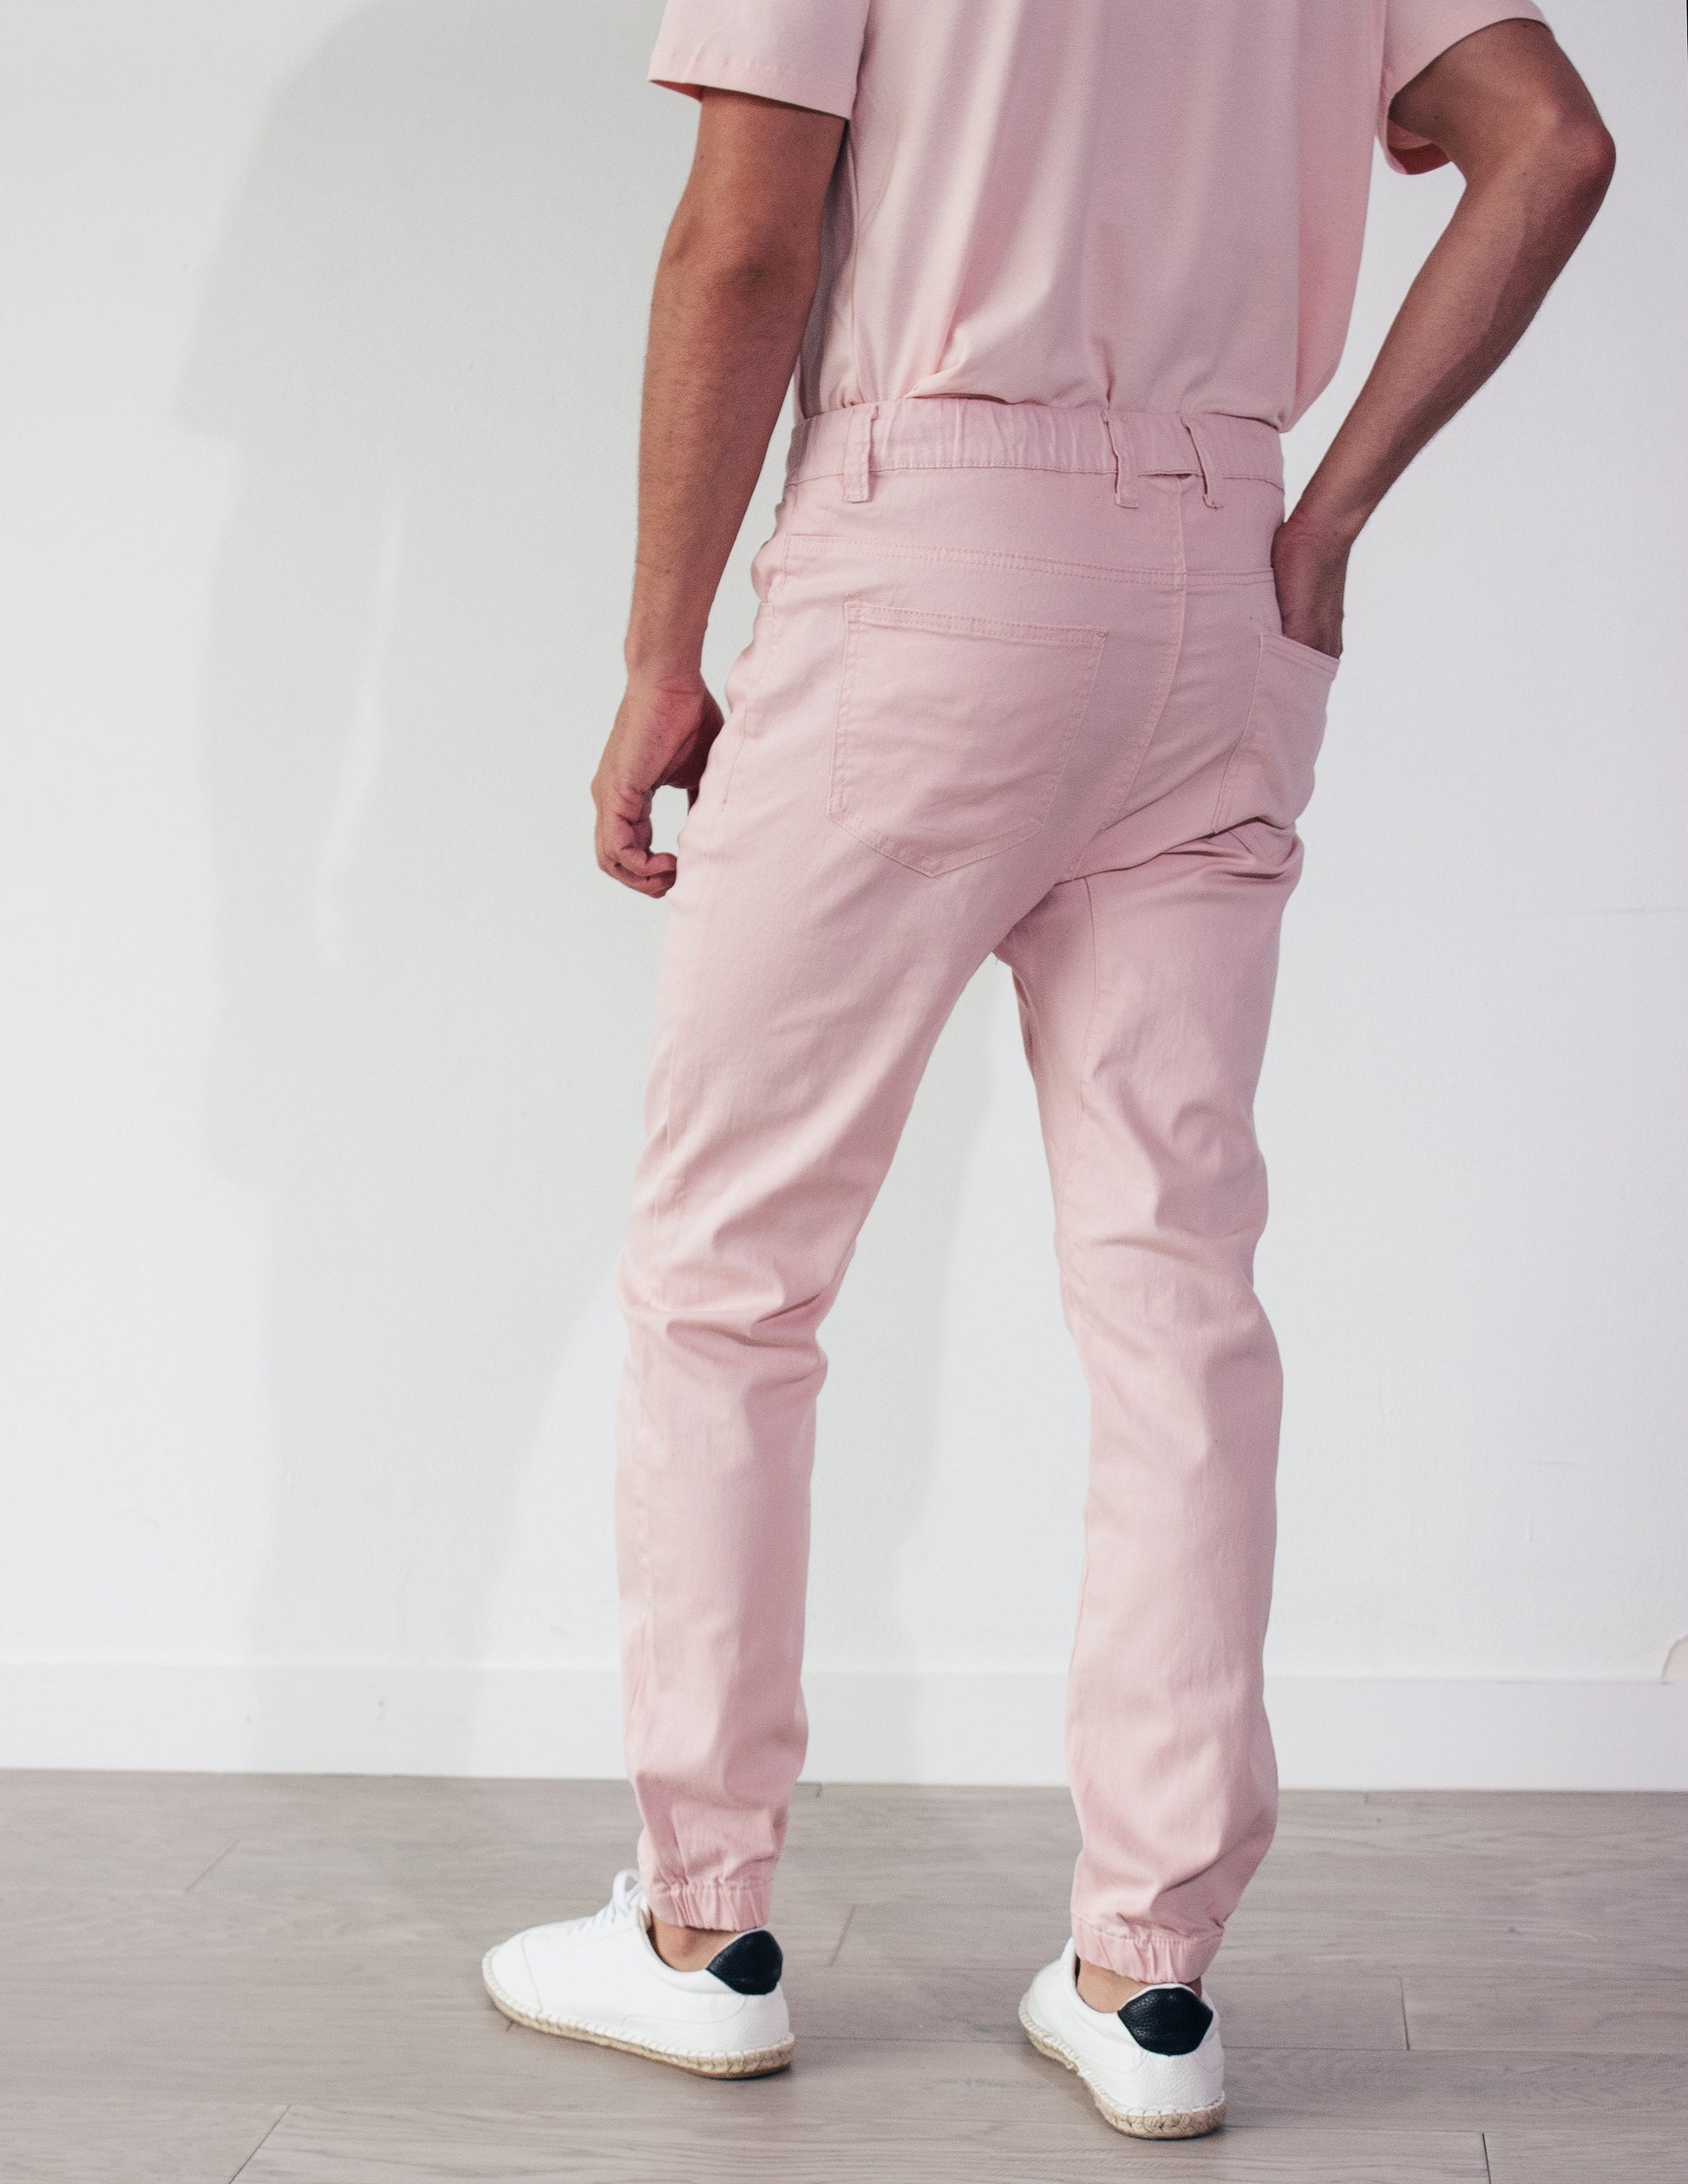 pink jogger pants men